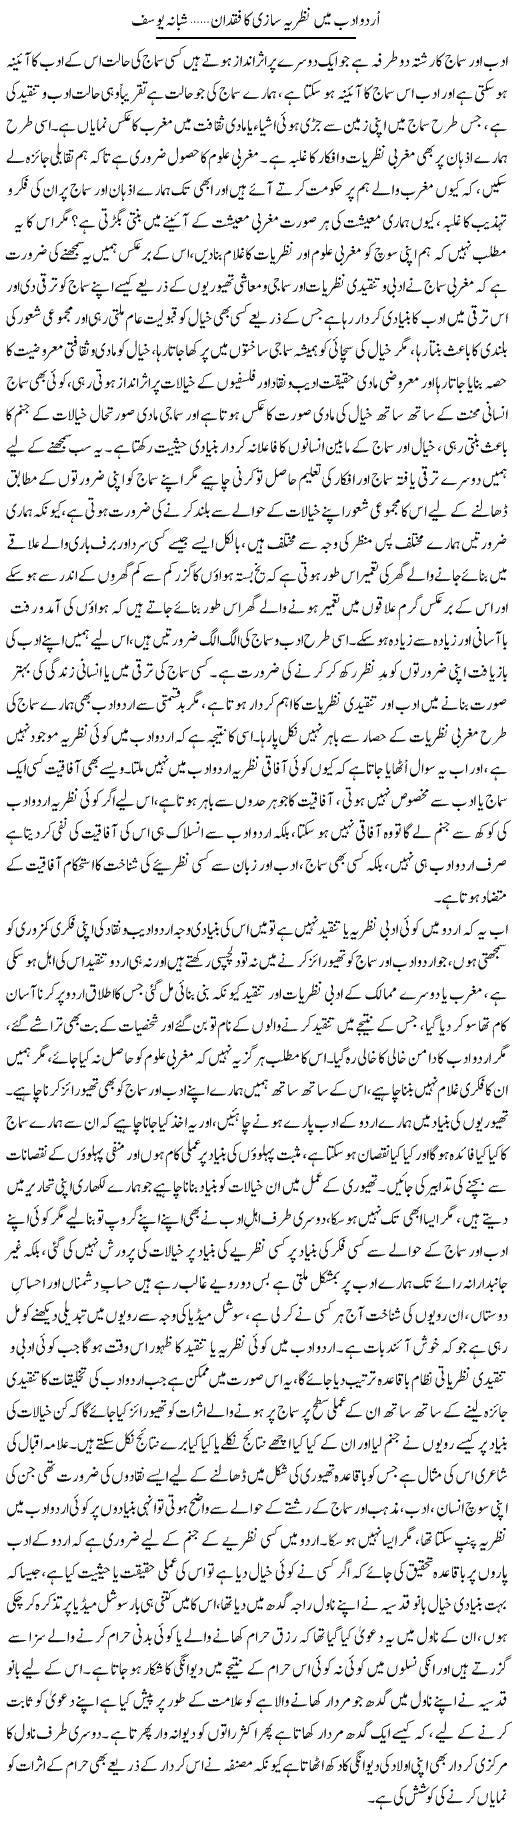 Urdu Adab Main Nazria Sazi Ka Fuqdan 1 | Shabana Yousaf | Daily Urdu Columns